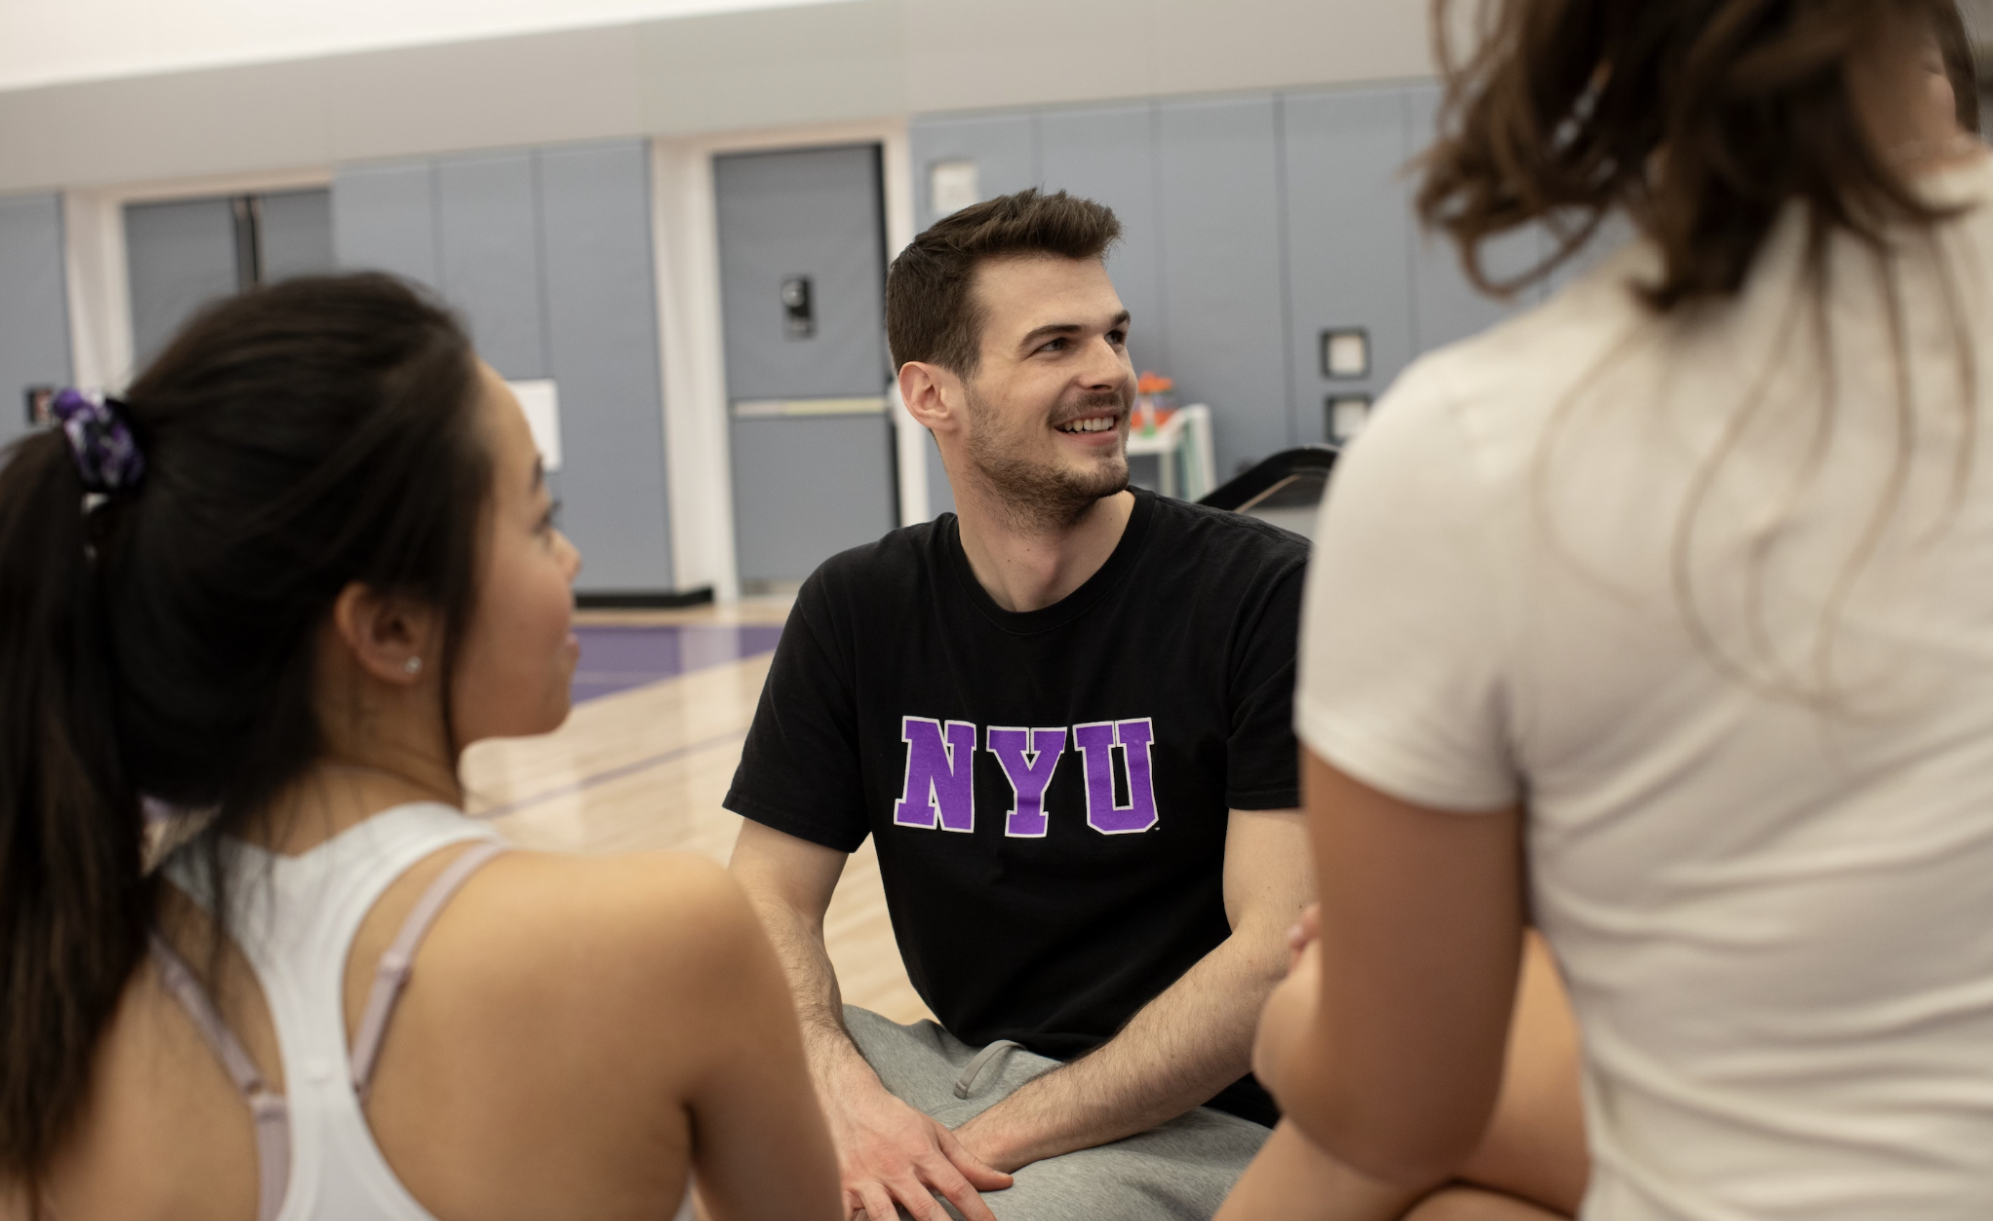 NYU students sitting in a gymnasium.